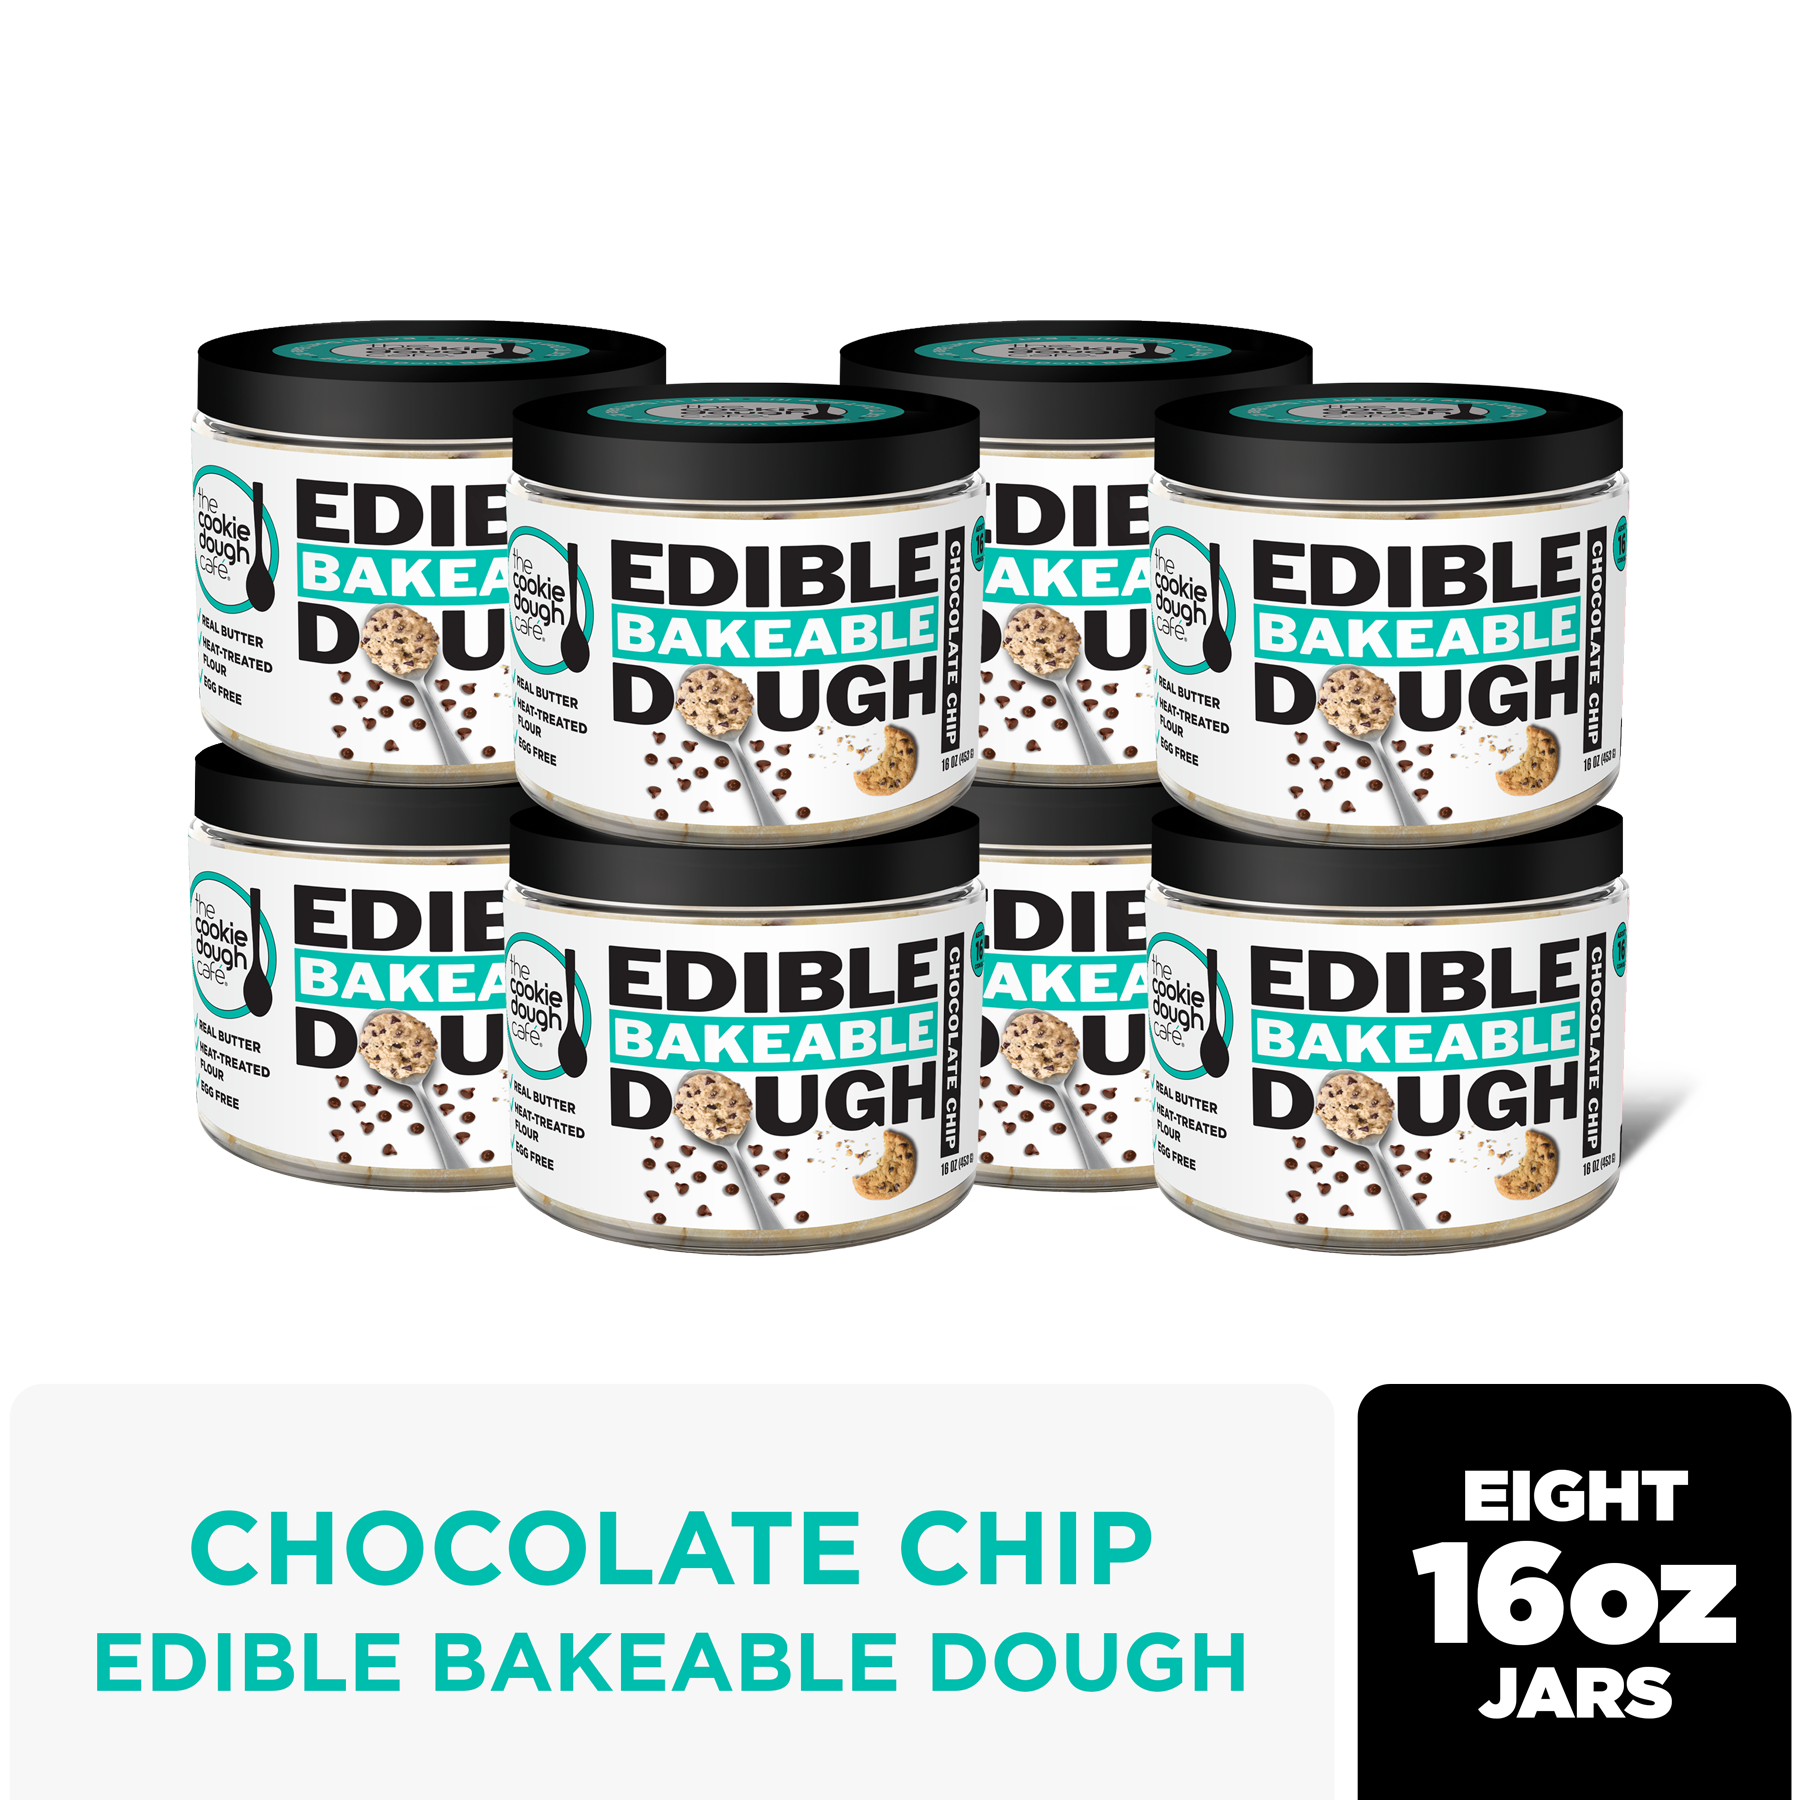 Chocolate Chip Bulk Tub-FREE SHIPPING – The Cookie Dough Café